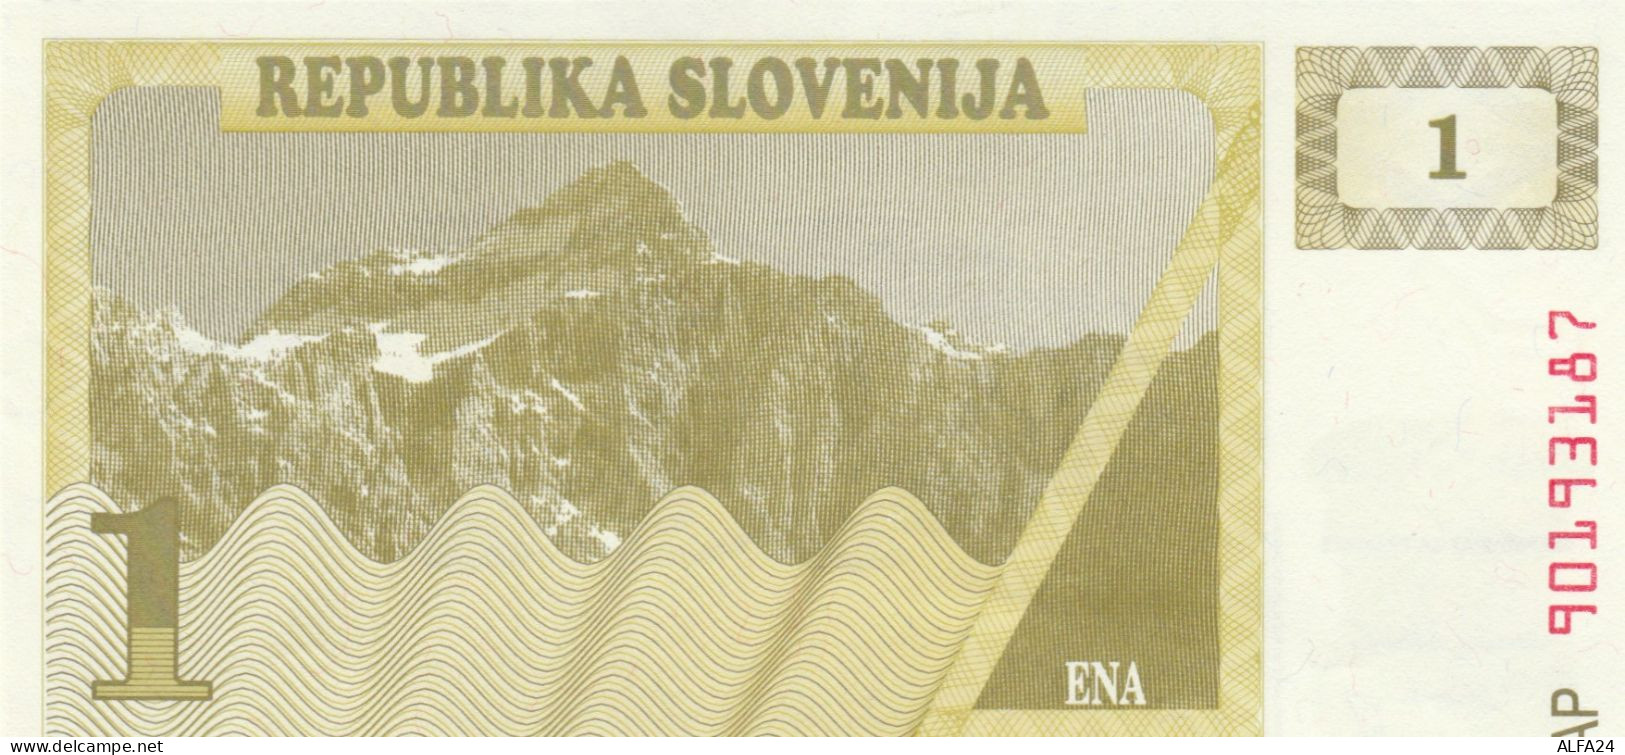 BANCONOTA 1 SLOVENIA UNC (ZX1444 - Eslovenia